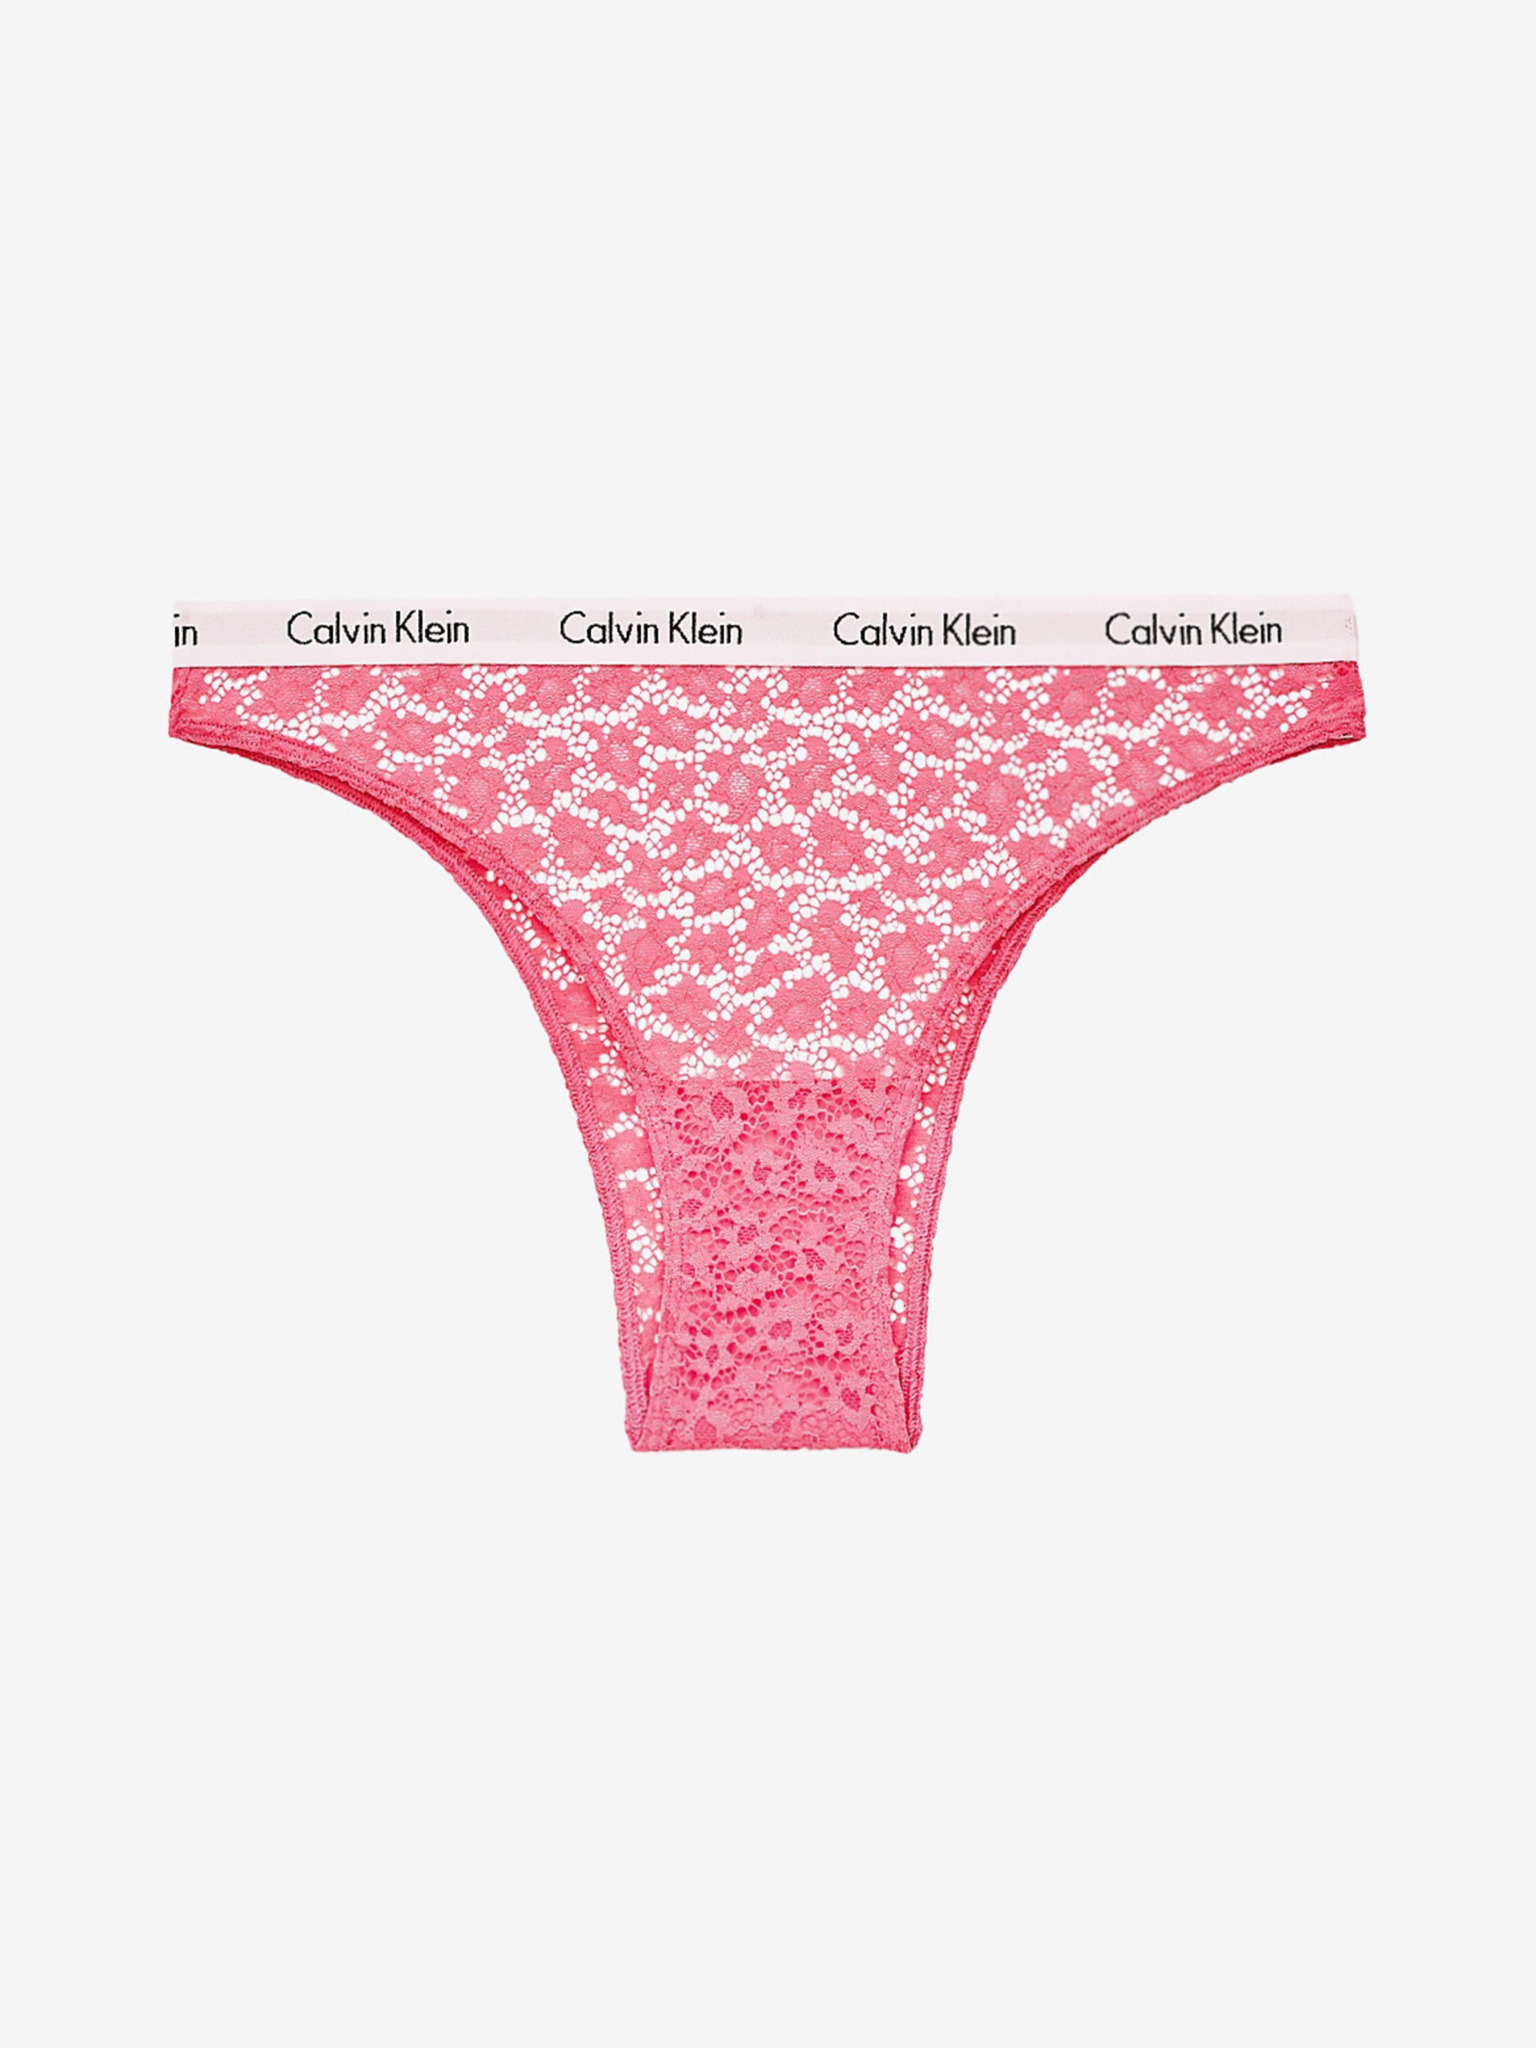 calvin klein bra xs pink lace